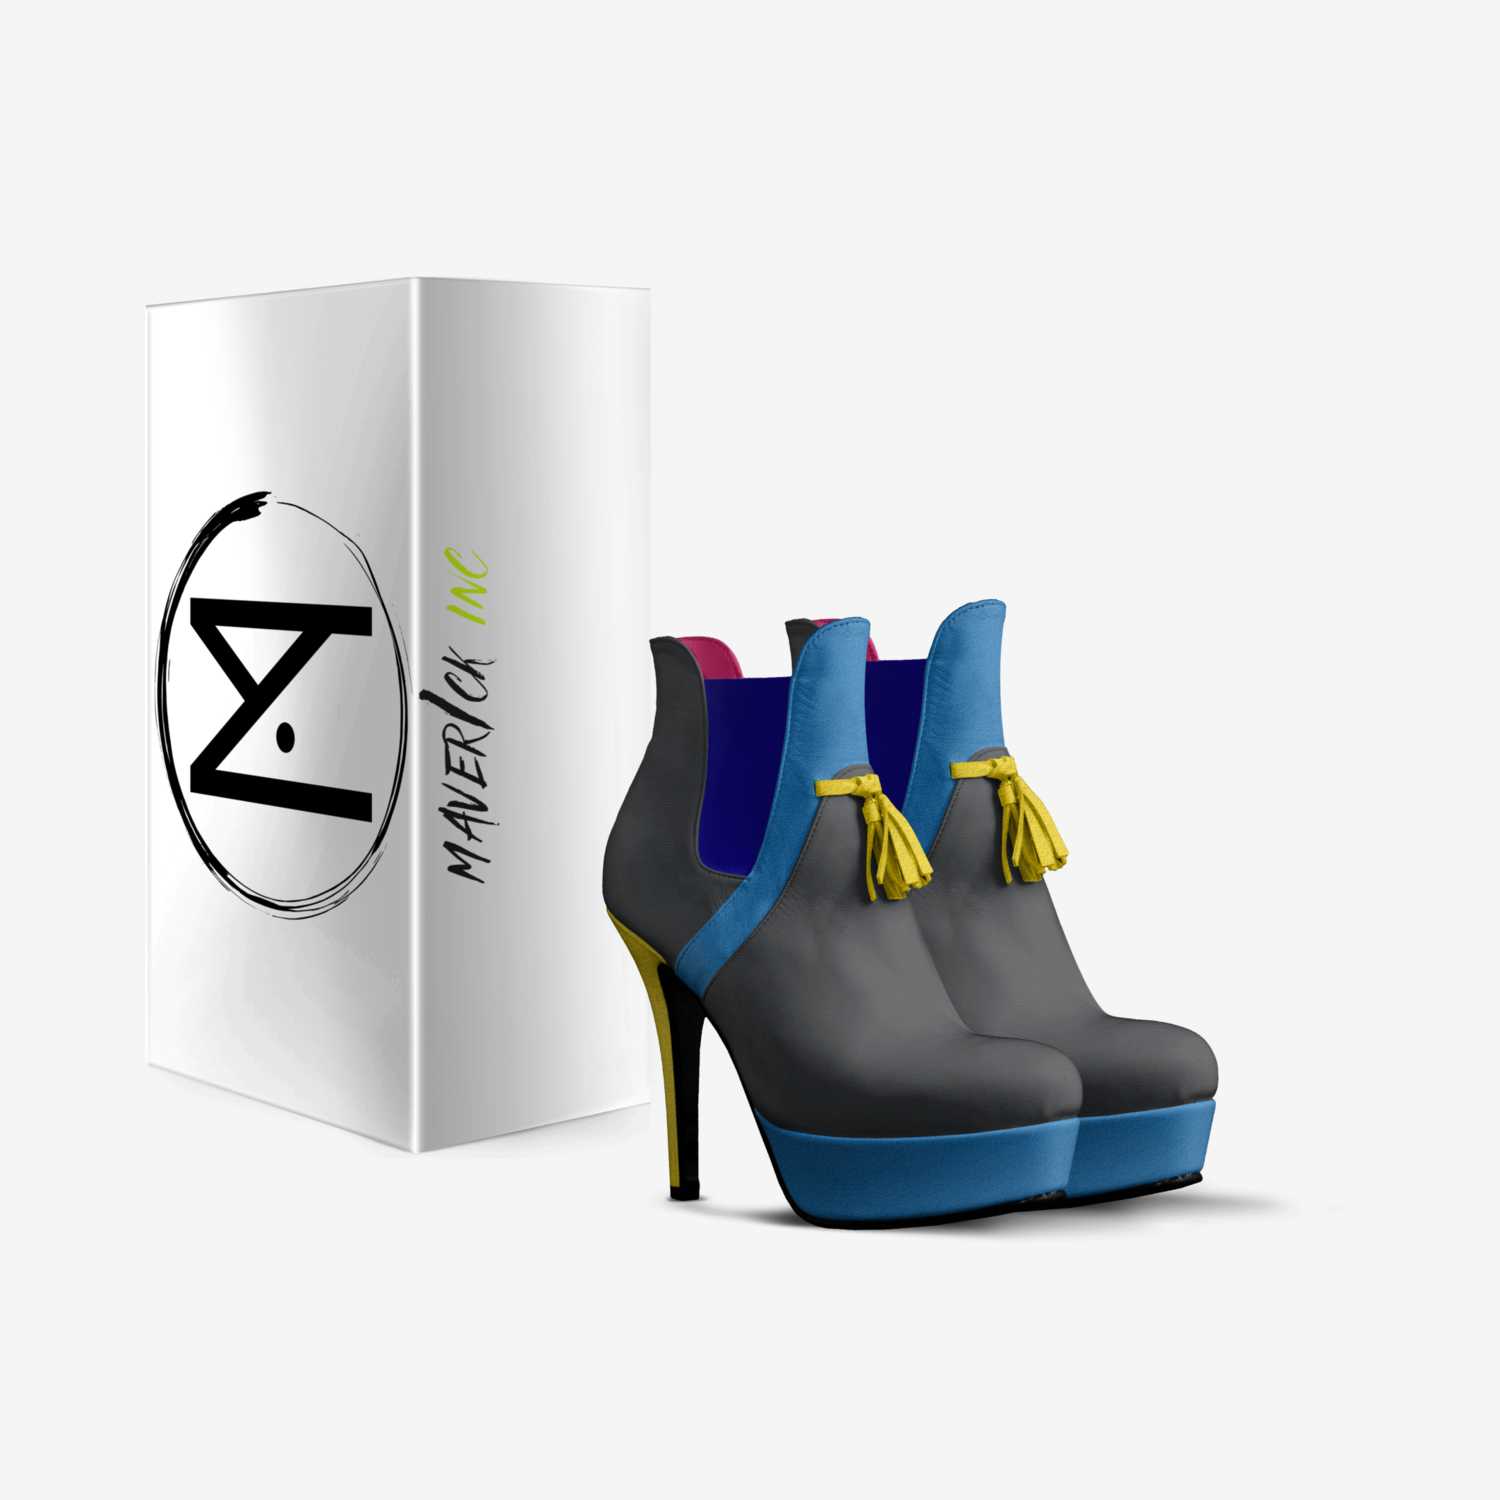 MAVERICK INC custom made in Italy shoes by Karimu Lindsey | Box view